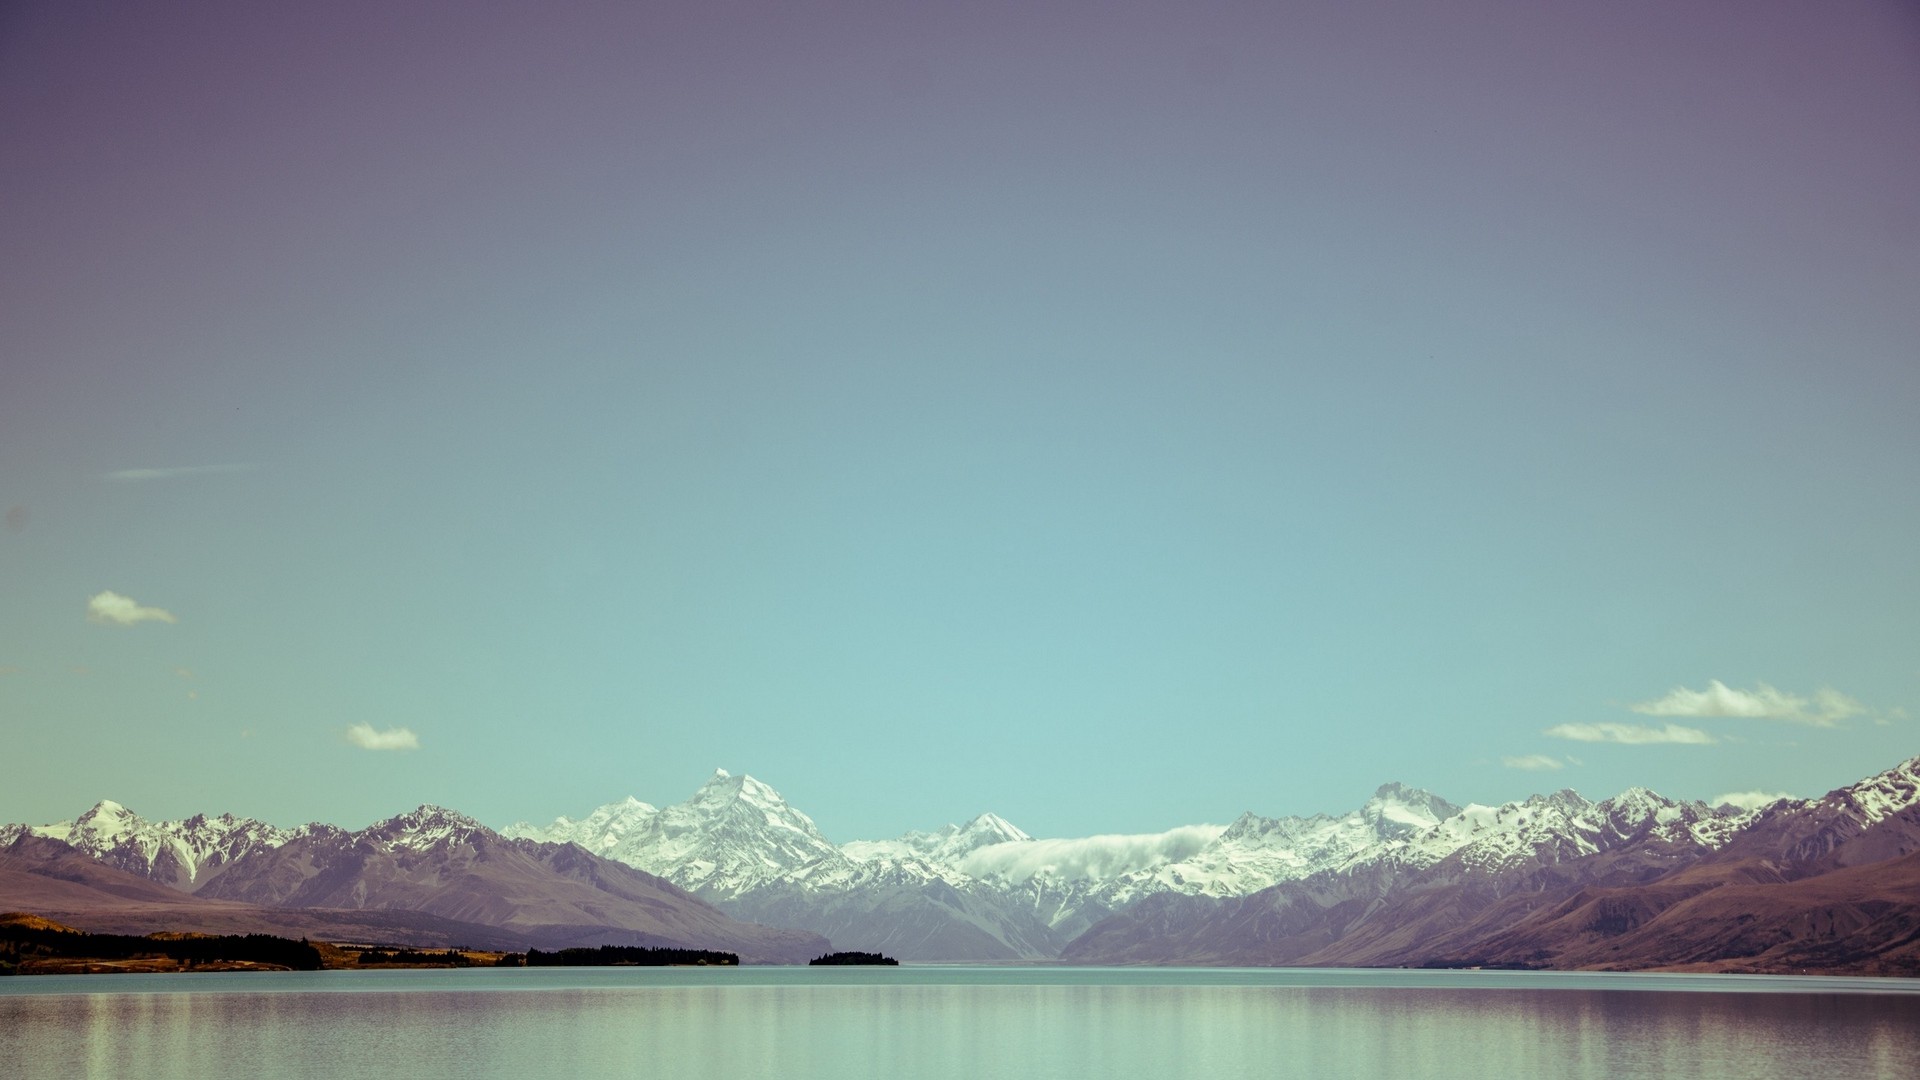 1920x1080 wallpapers: mountains, sky, lake, peaks (image)